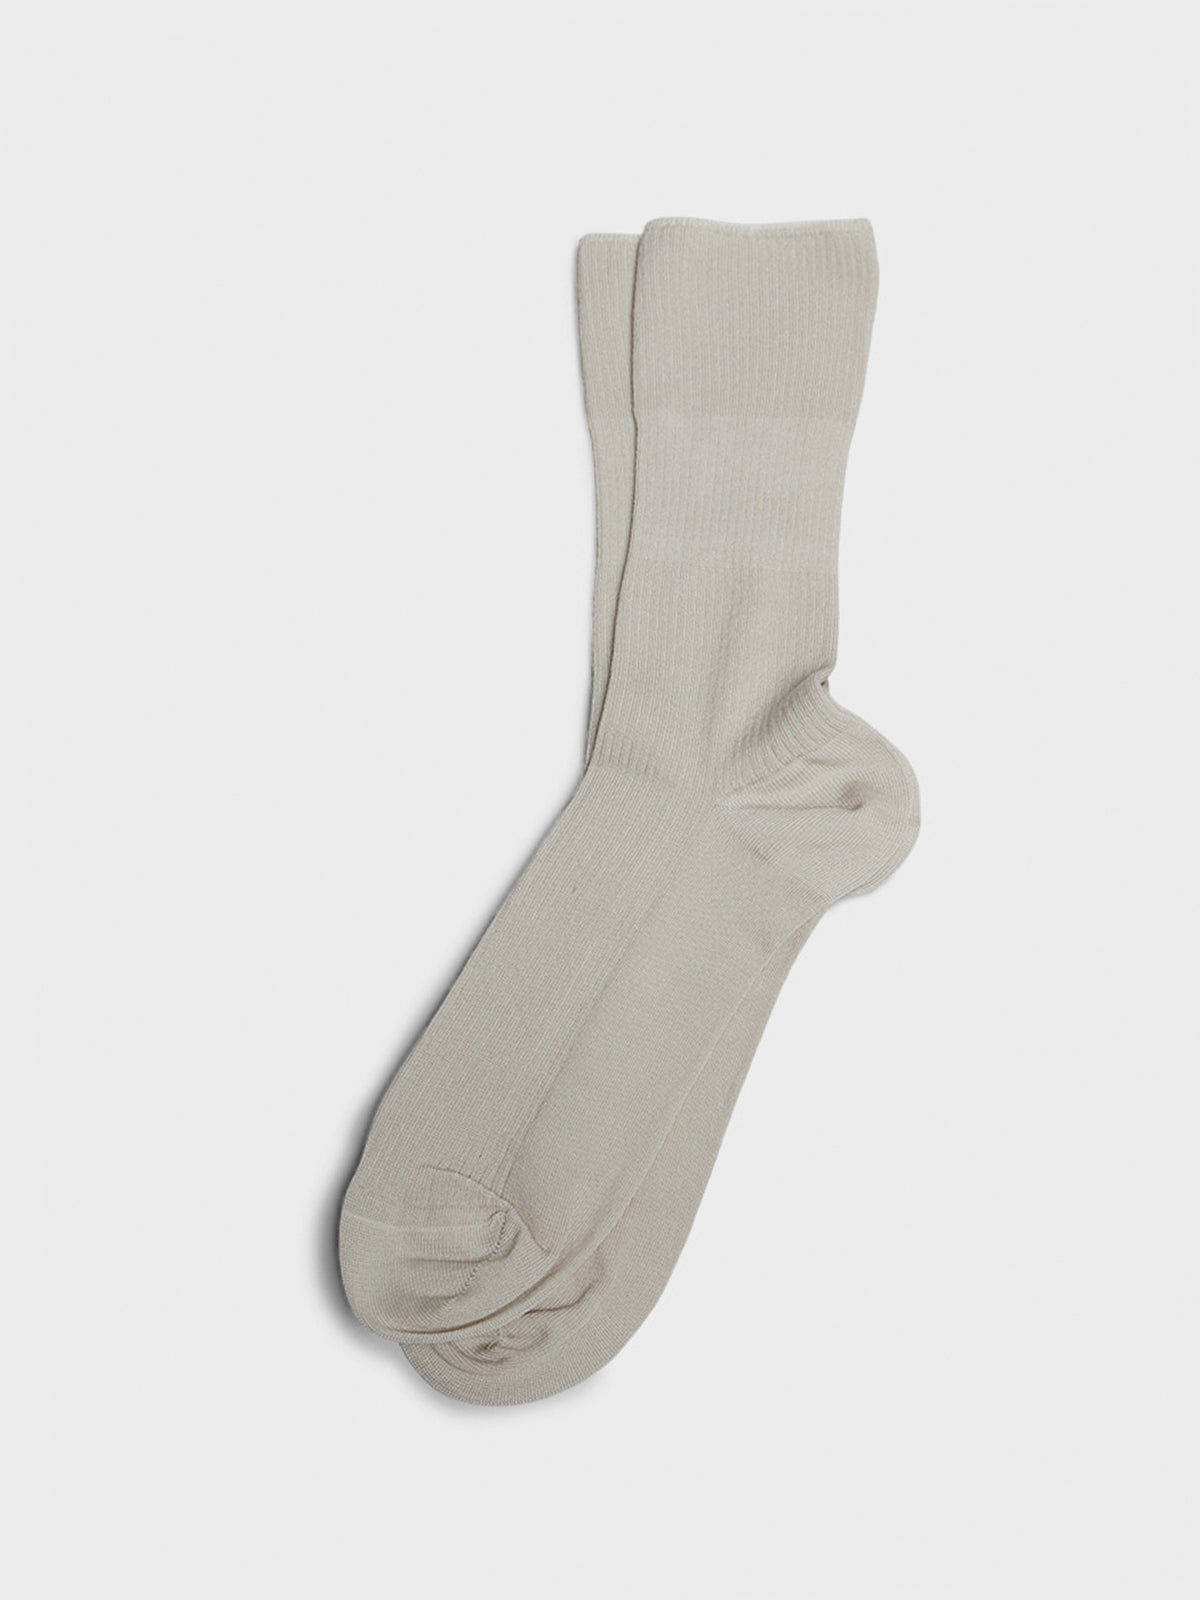 Mrs. Supreme Cotton Socks in Ecru